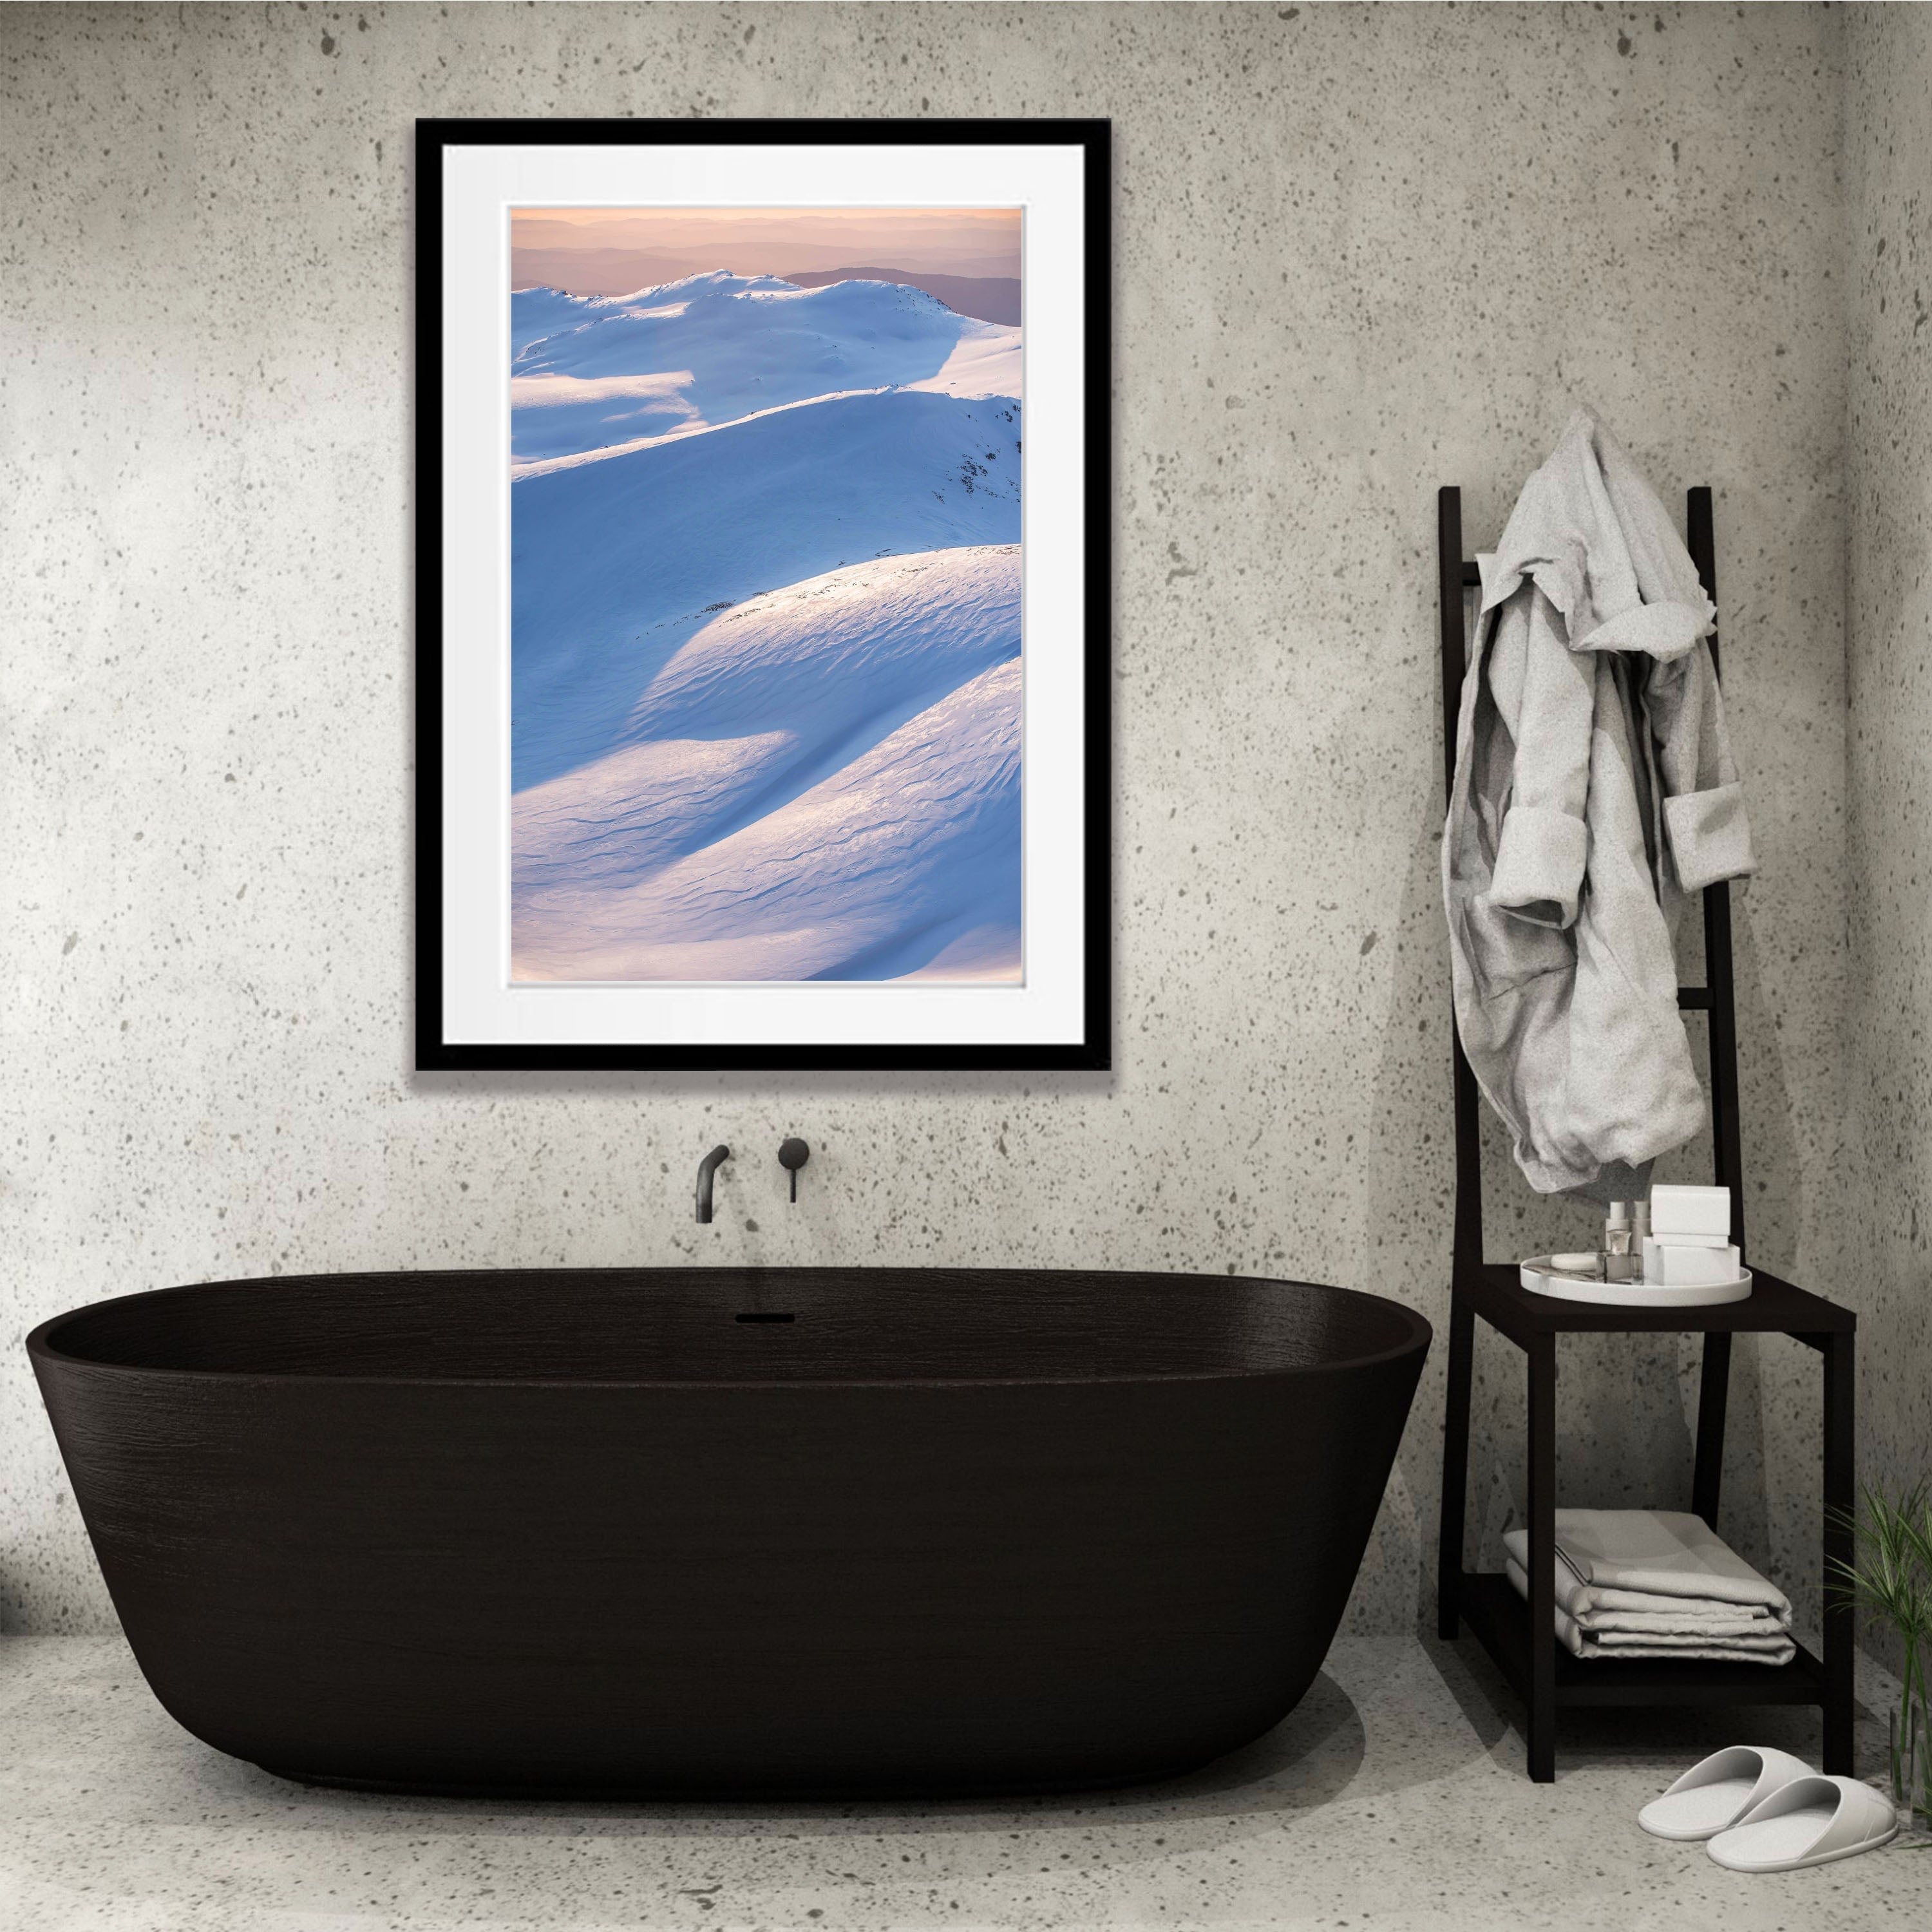 ARTWORK INSTOCK -  Ridgelines, Snowy Mountains, New South Wales - 150 x 100cms Canvas Raw Oak Print